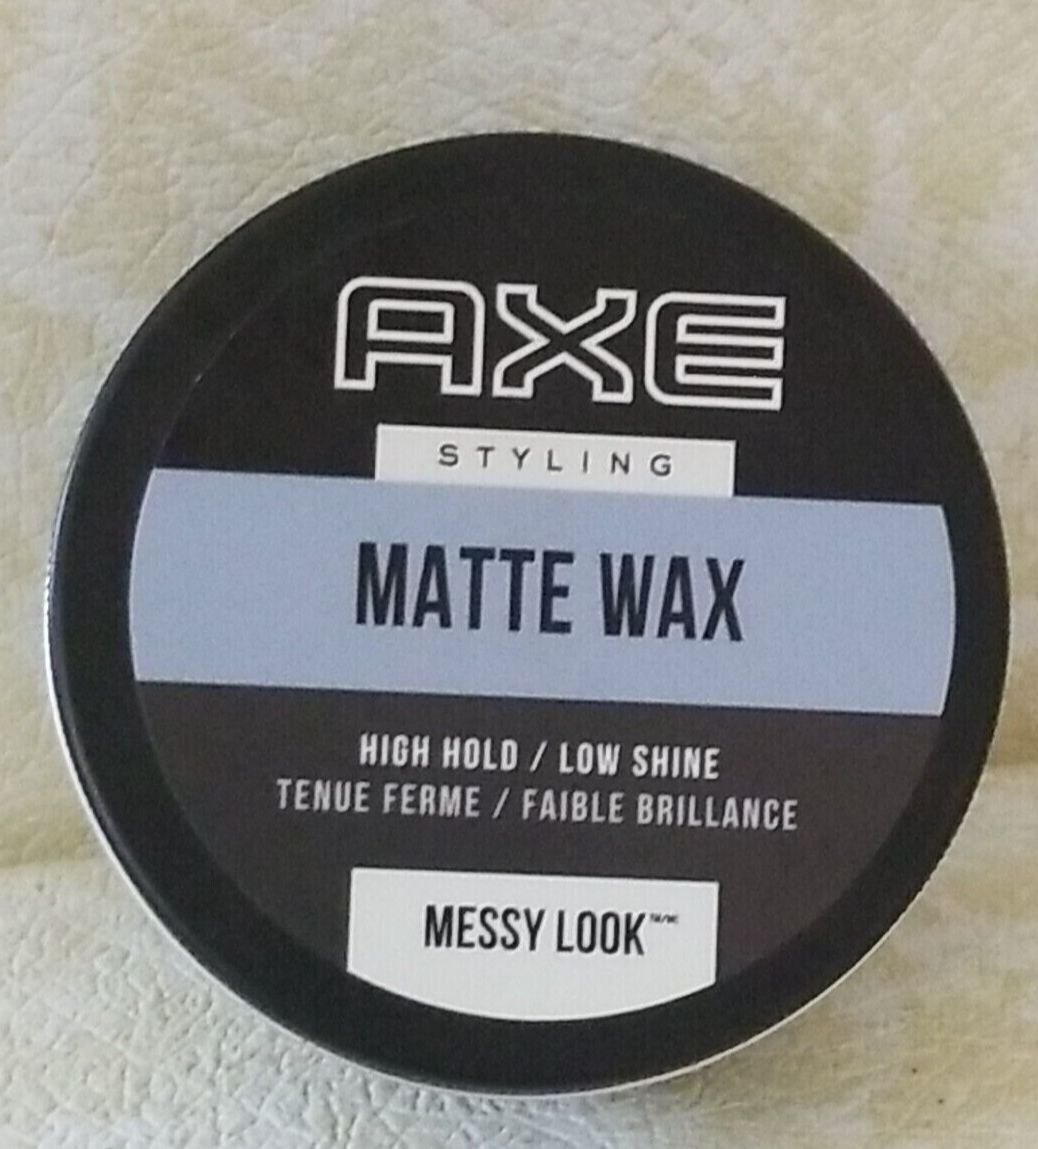 (2 Pack) Axe Matte Wax Messy Look, 2.64 oz